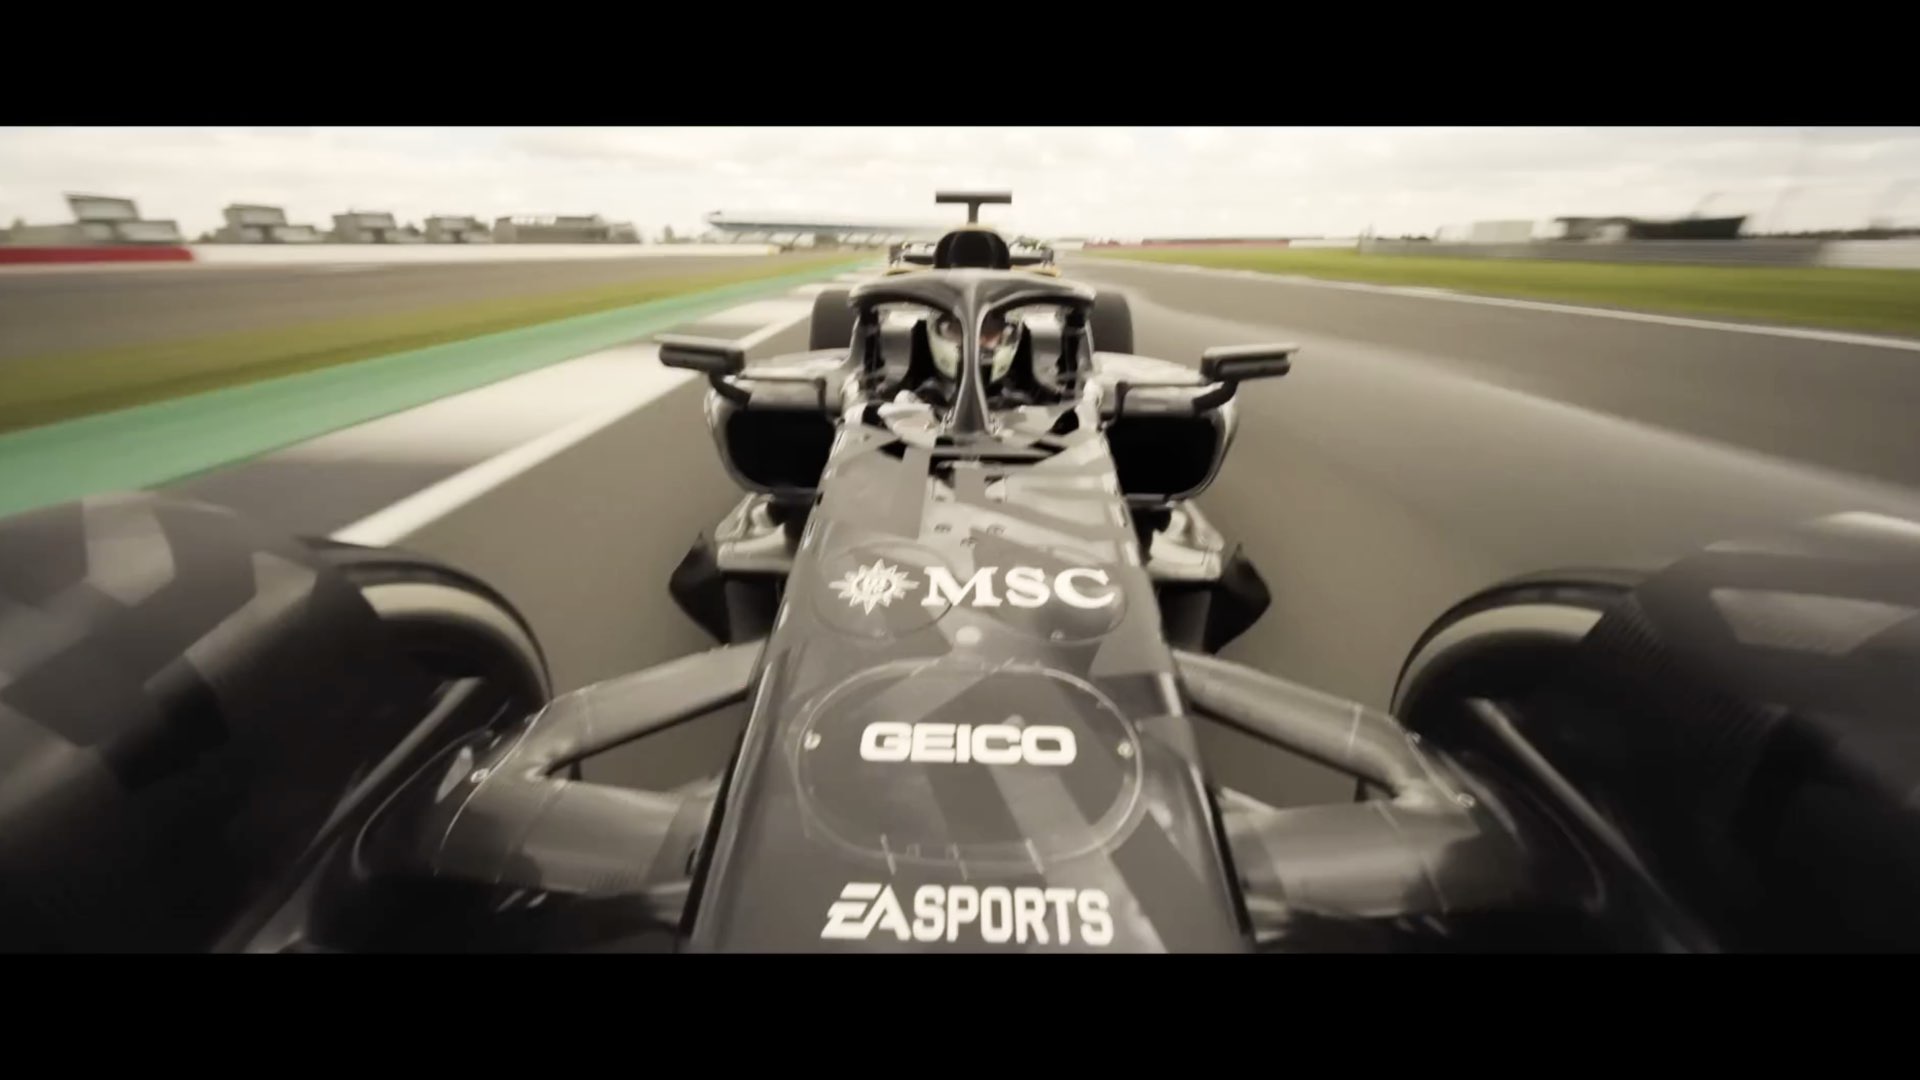 F1 film. A screenshot from the teaser